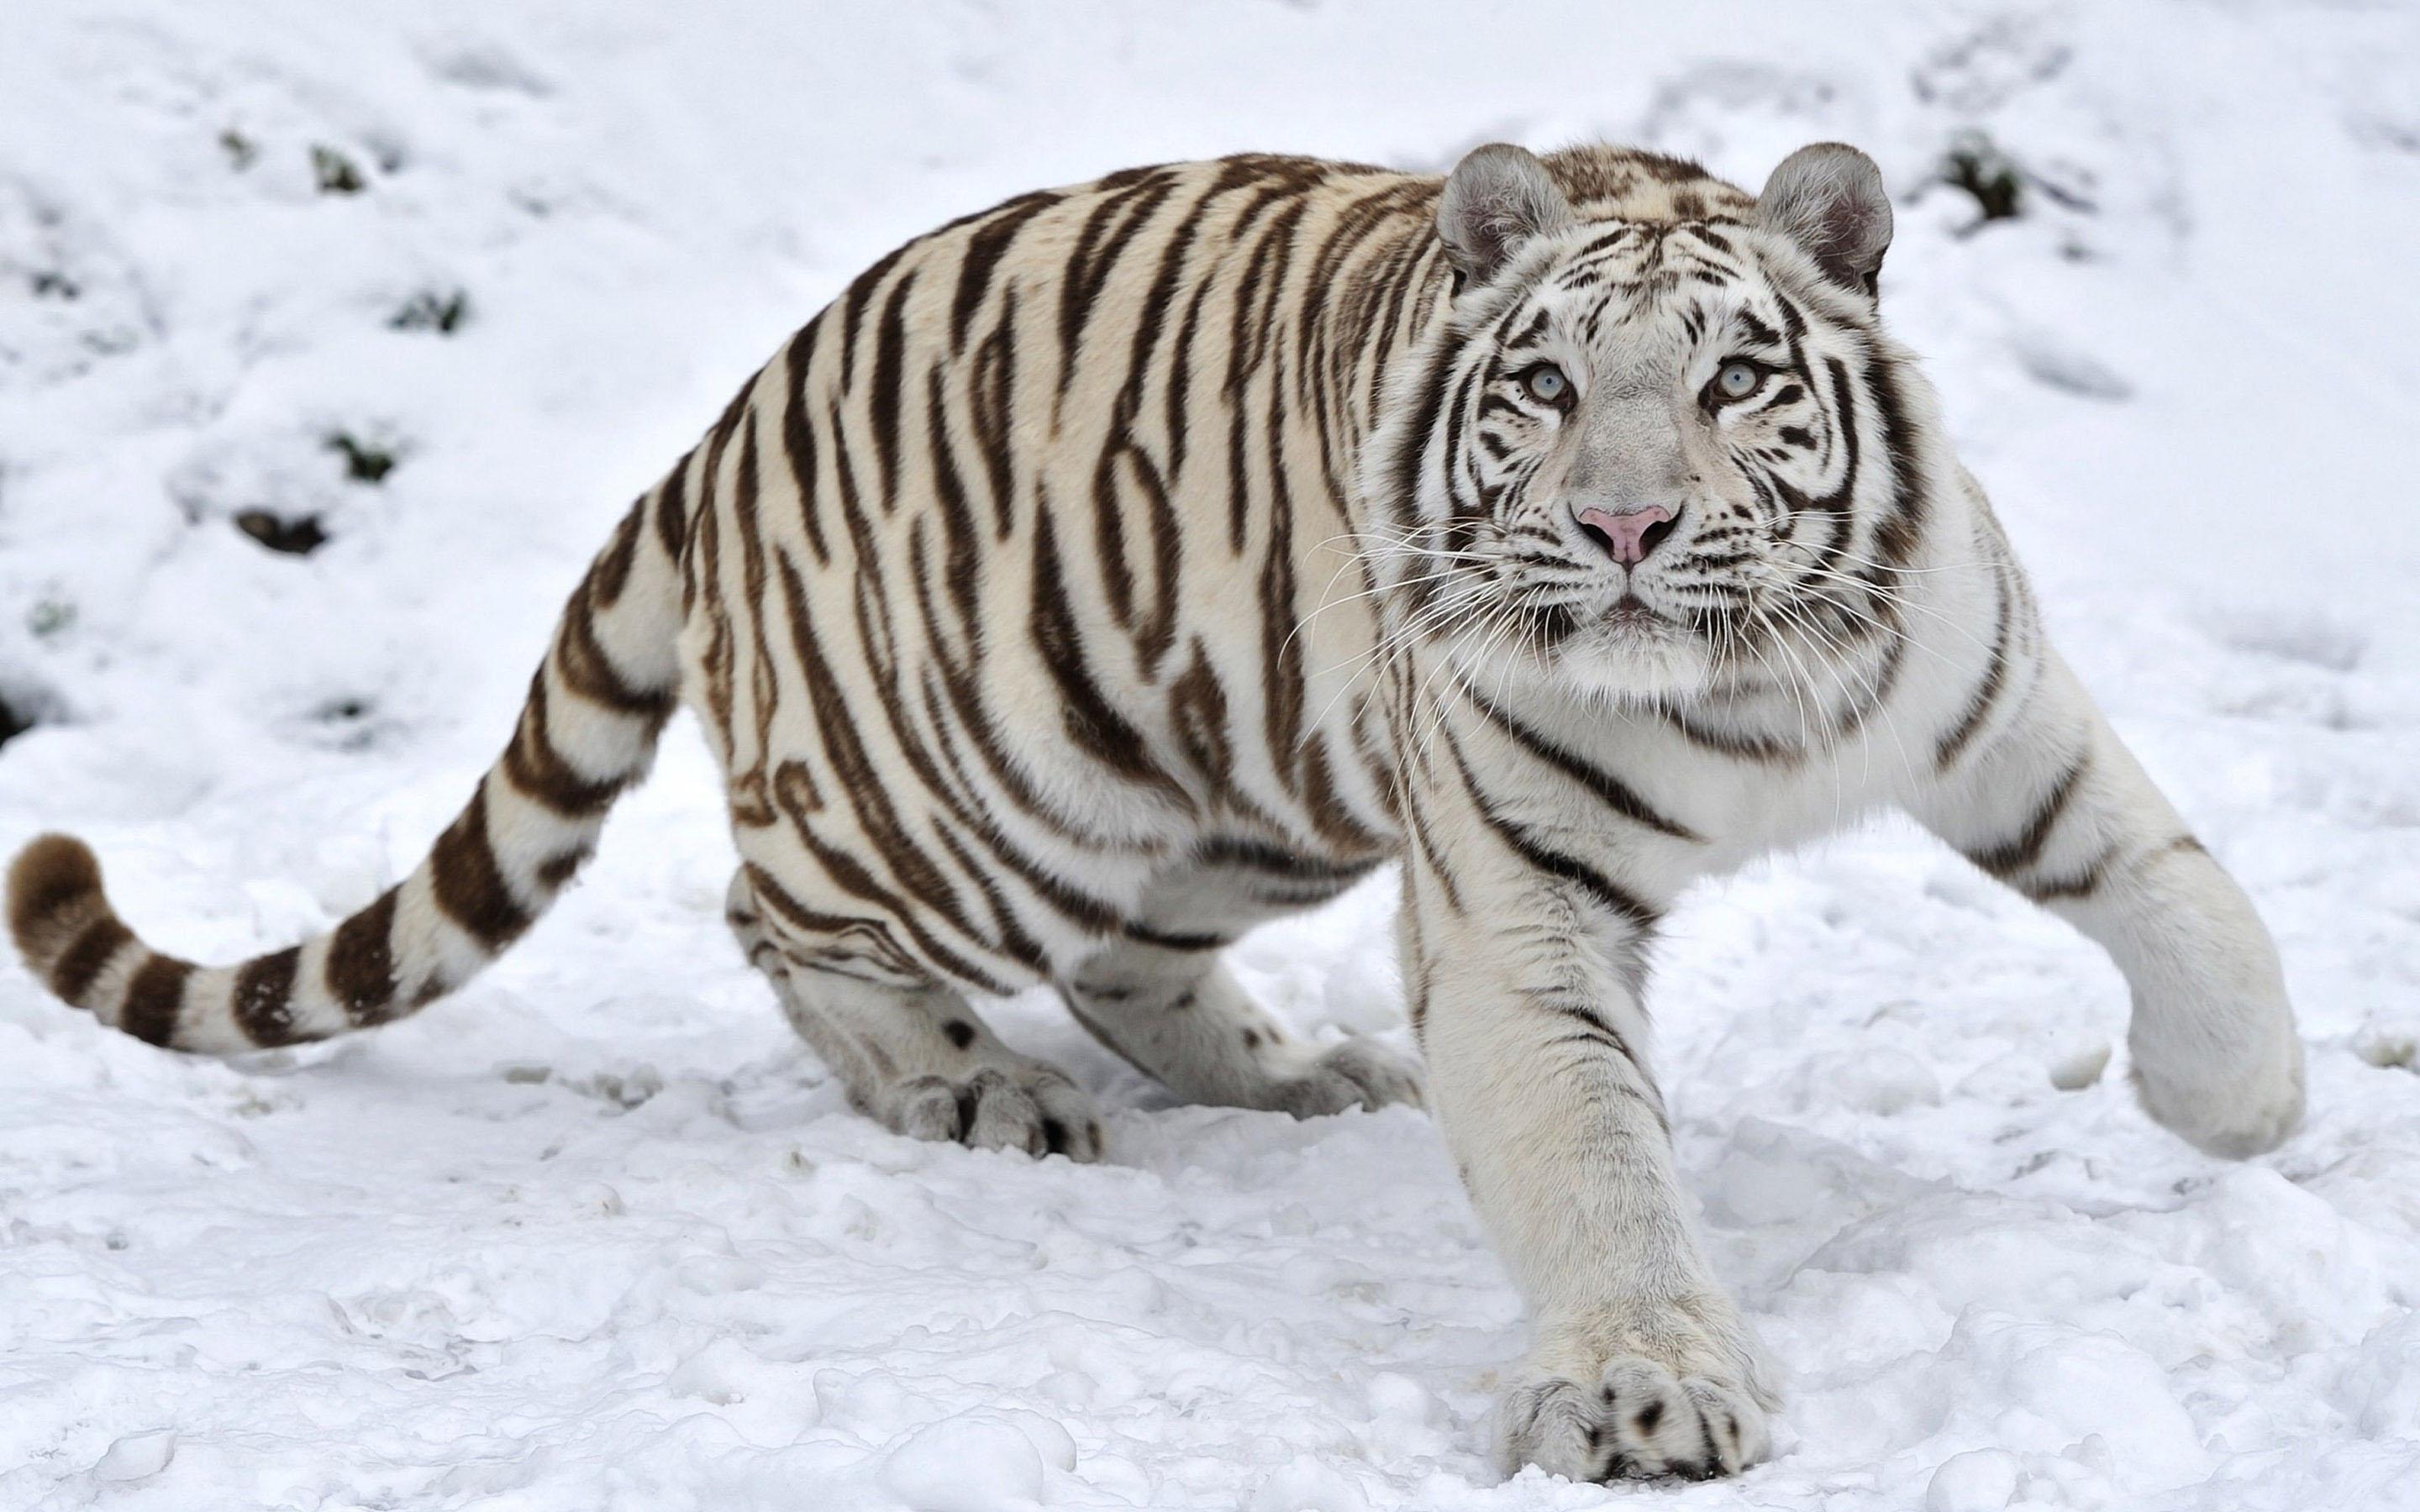 HD wallpaper Tiger in winter 3k. HD Image